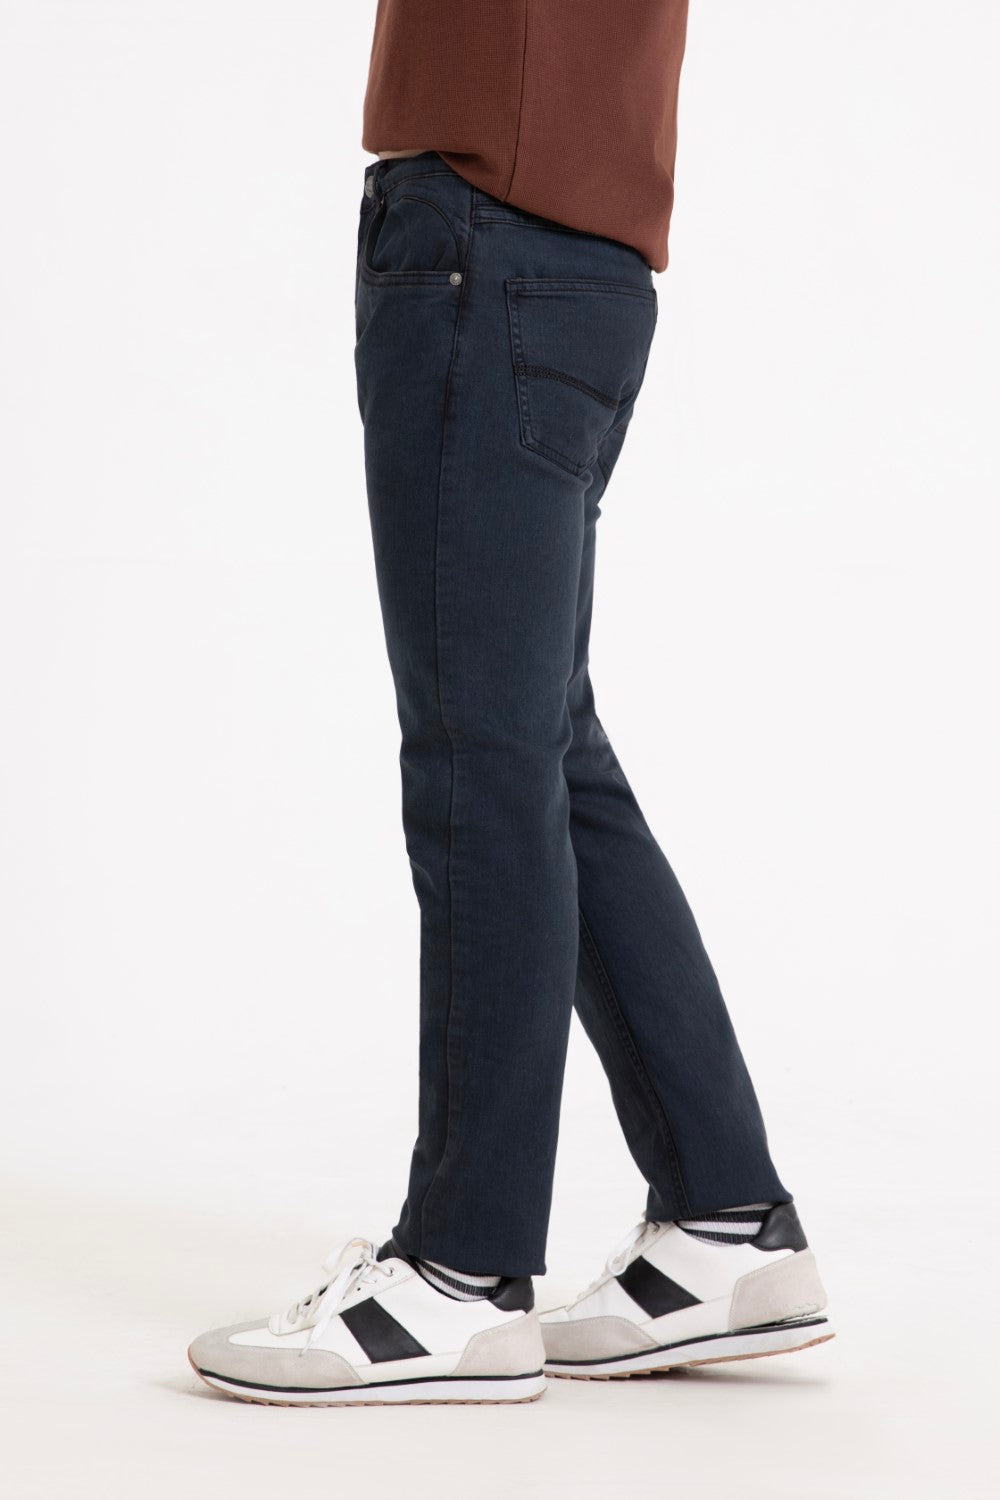 Charcoal Smart Fit Jean